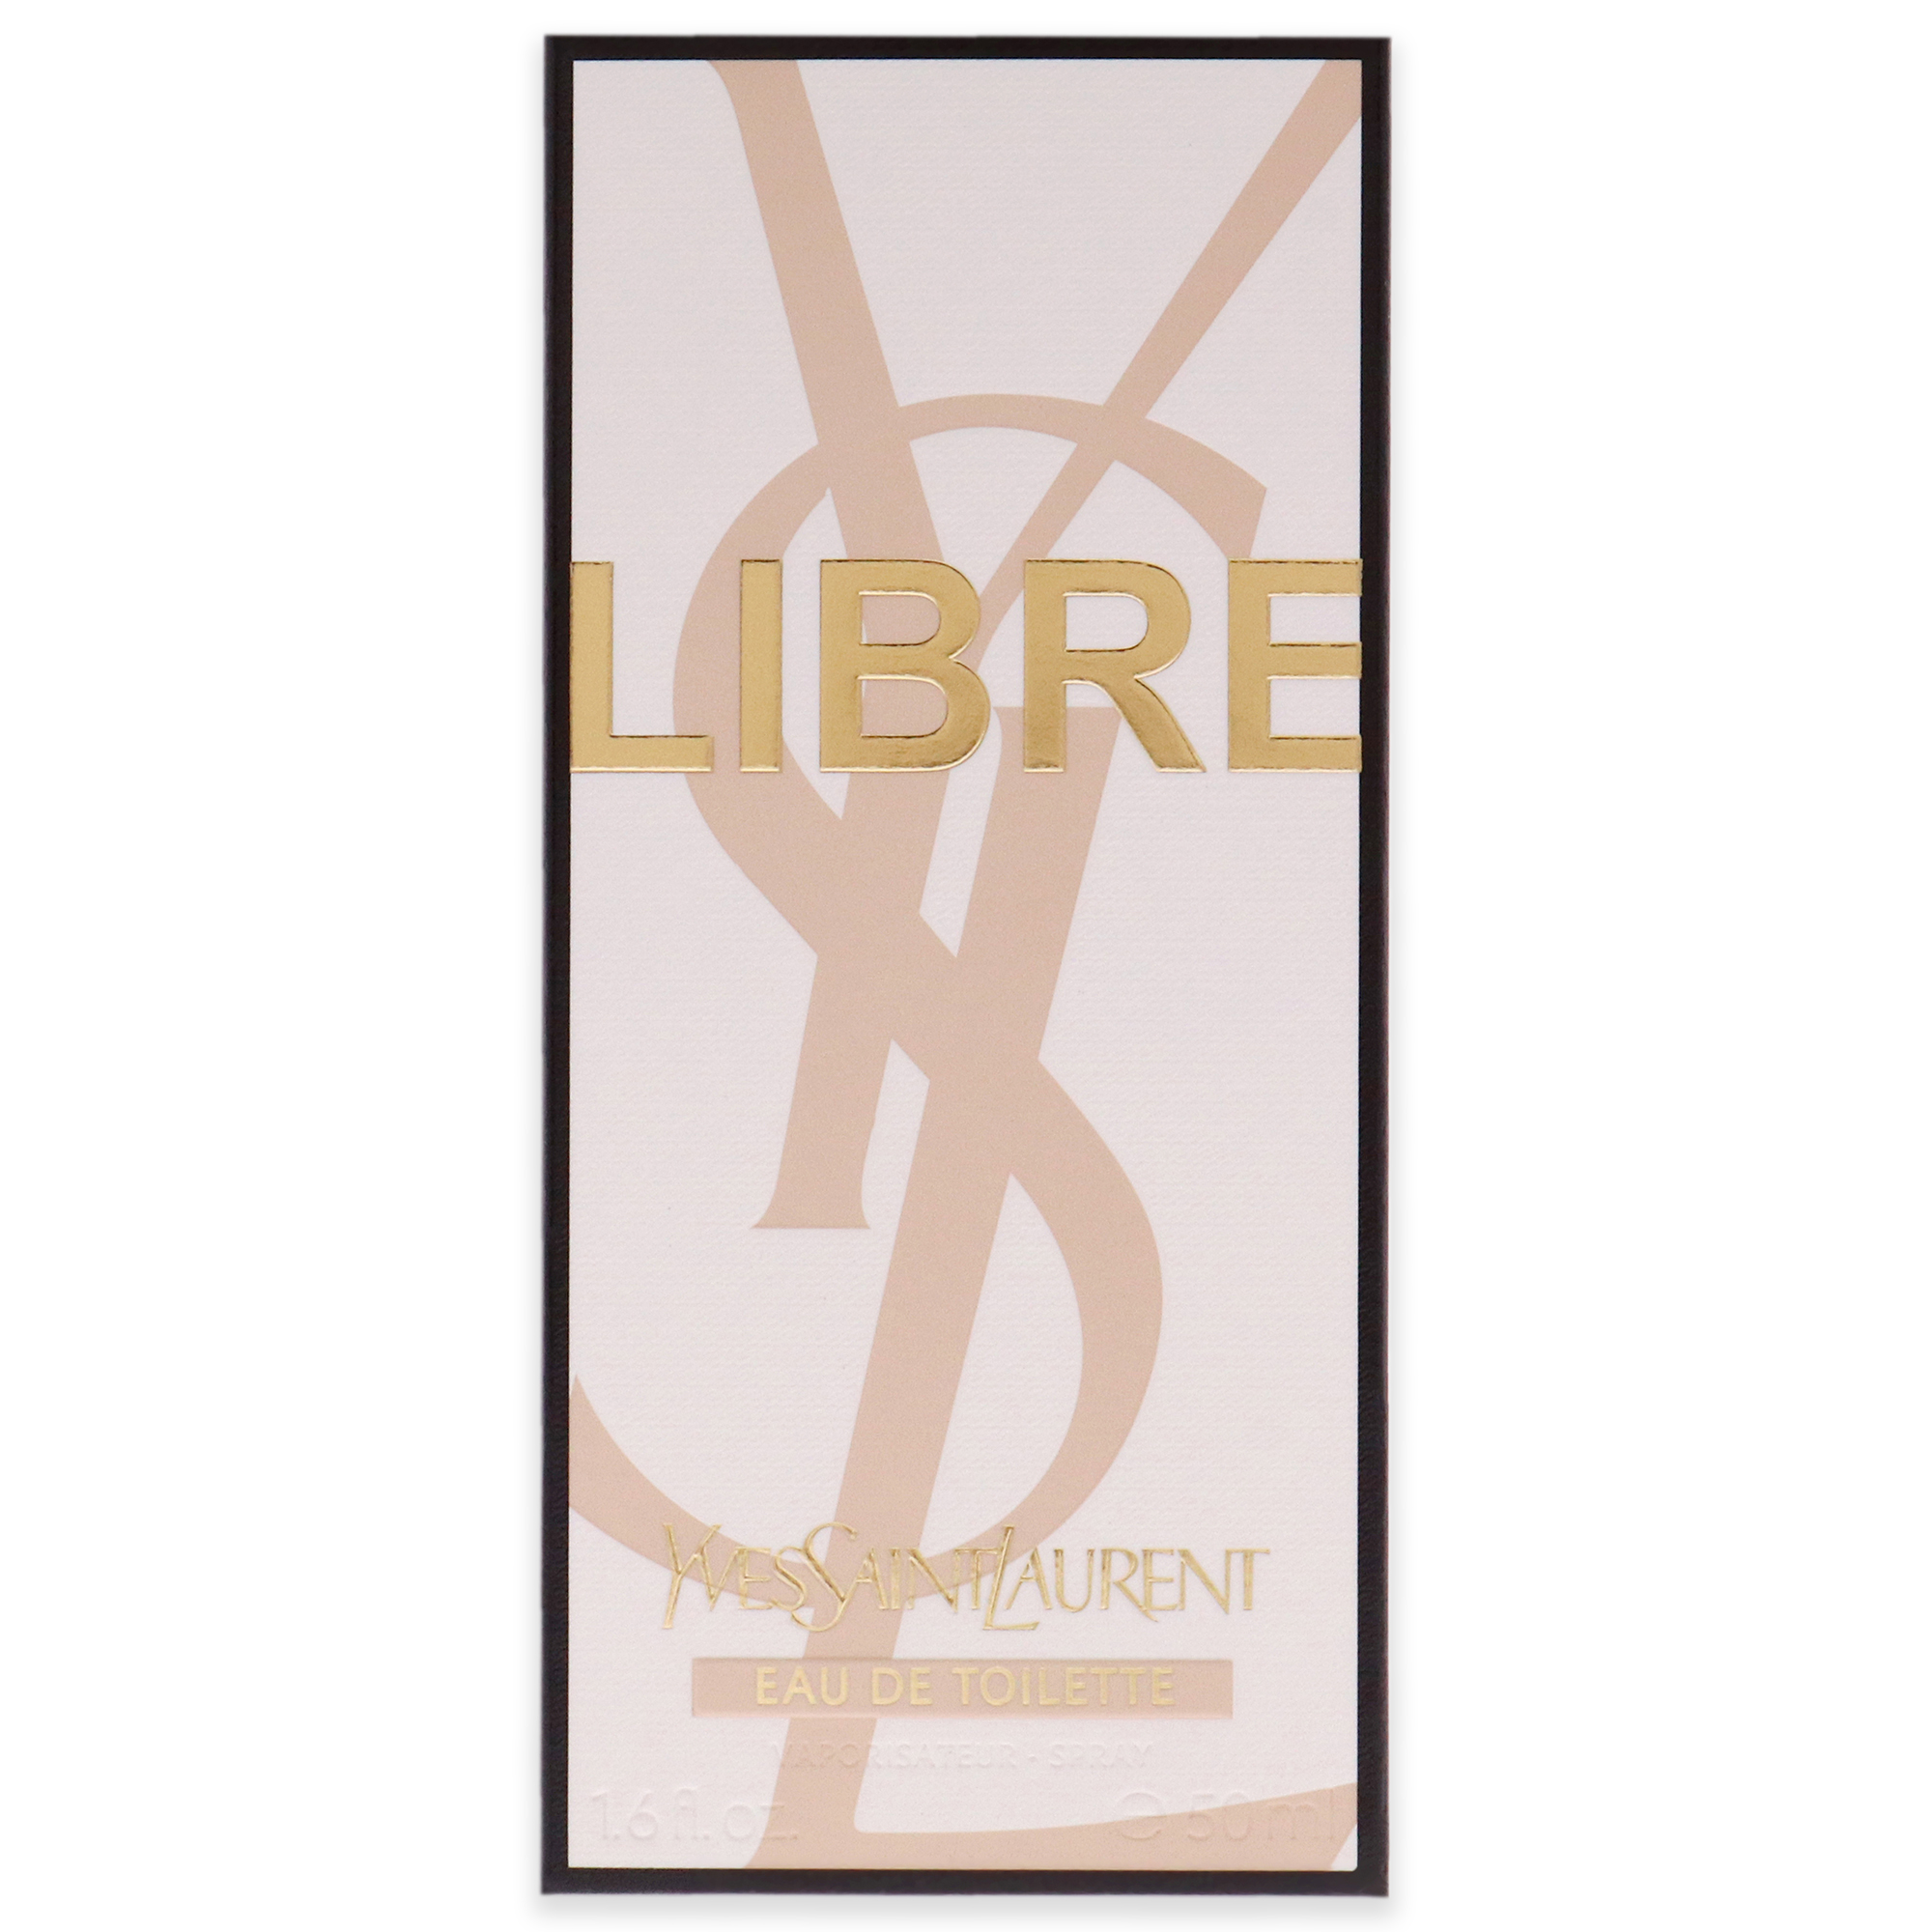 Yves Saint Laurent Ladies Libre EDT Spray 1.6 oz Fragrances 3614273321792 - image 5 of 6